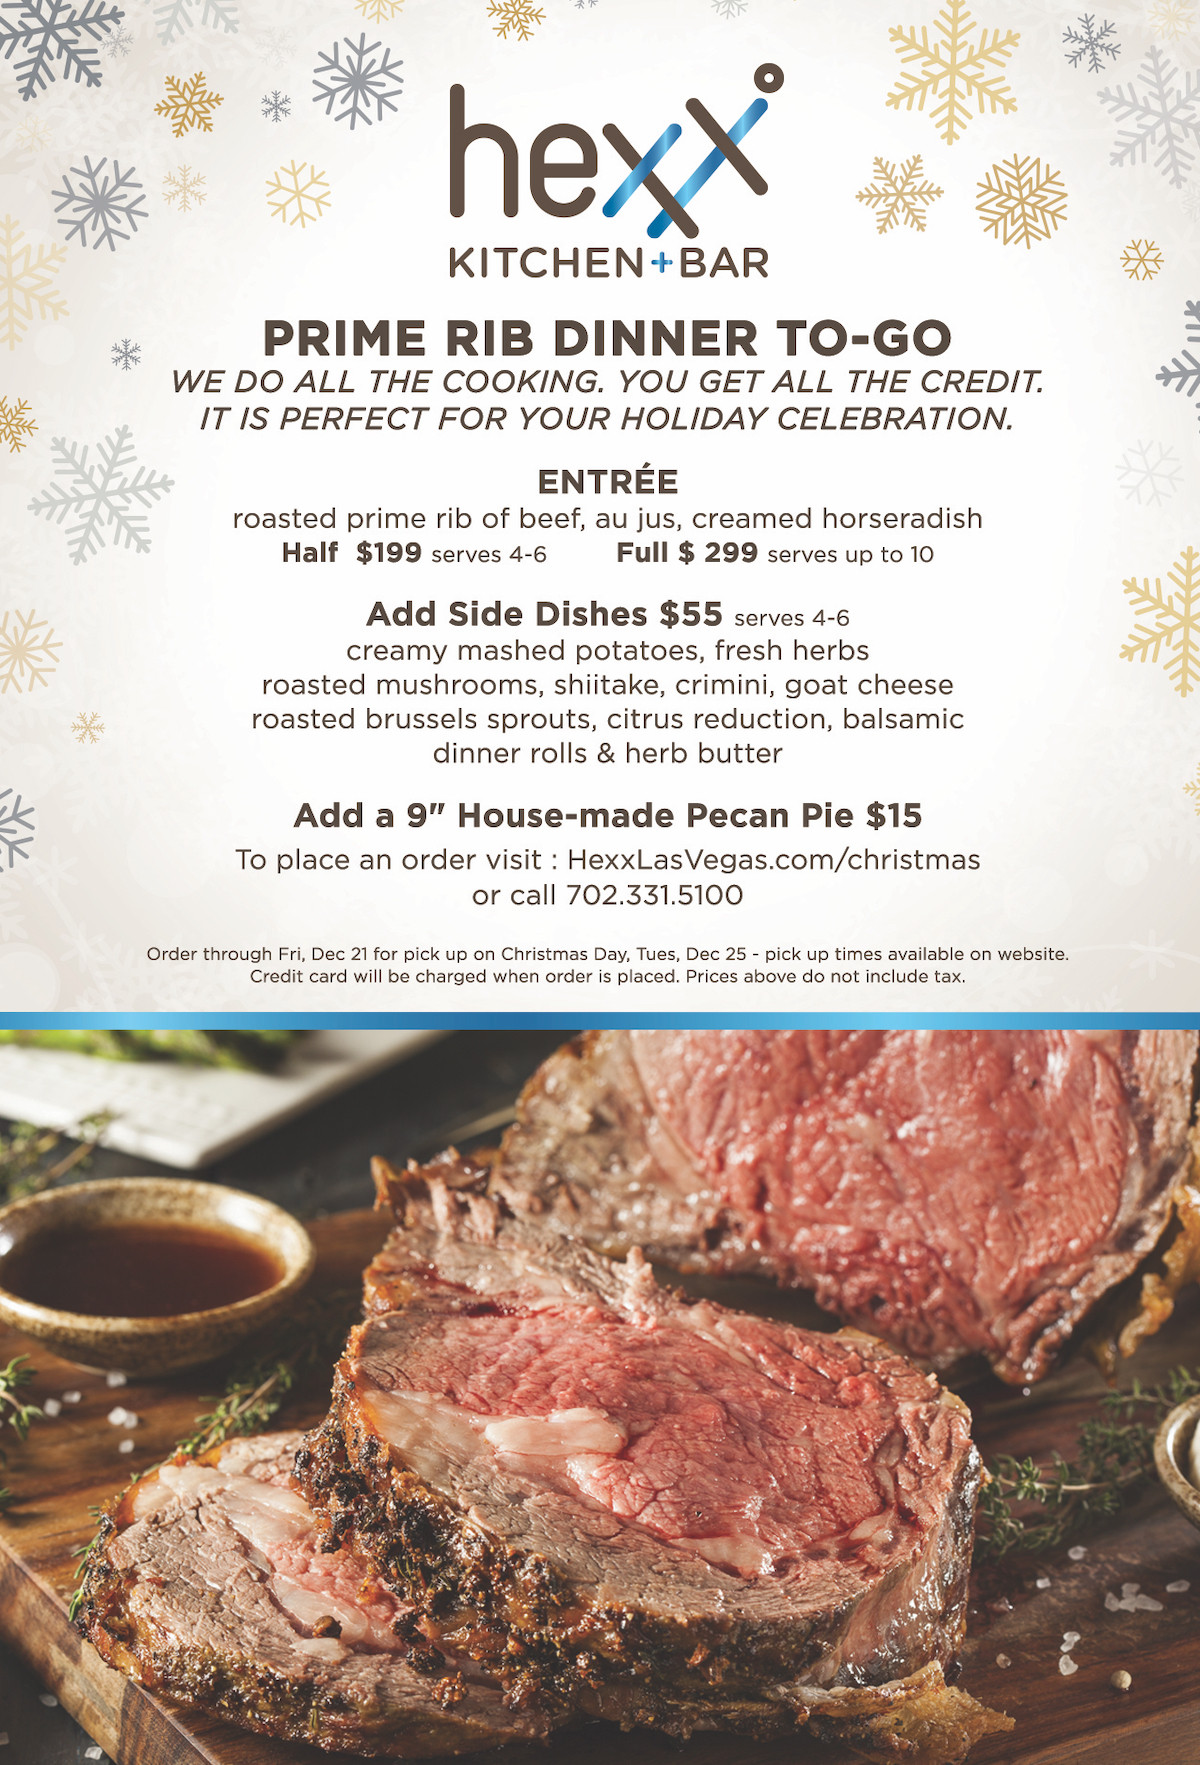 Prime Rib Dinner Menu Christmas
 christmas dinner 2018 HEXX kitchen bar Paris Las